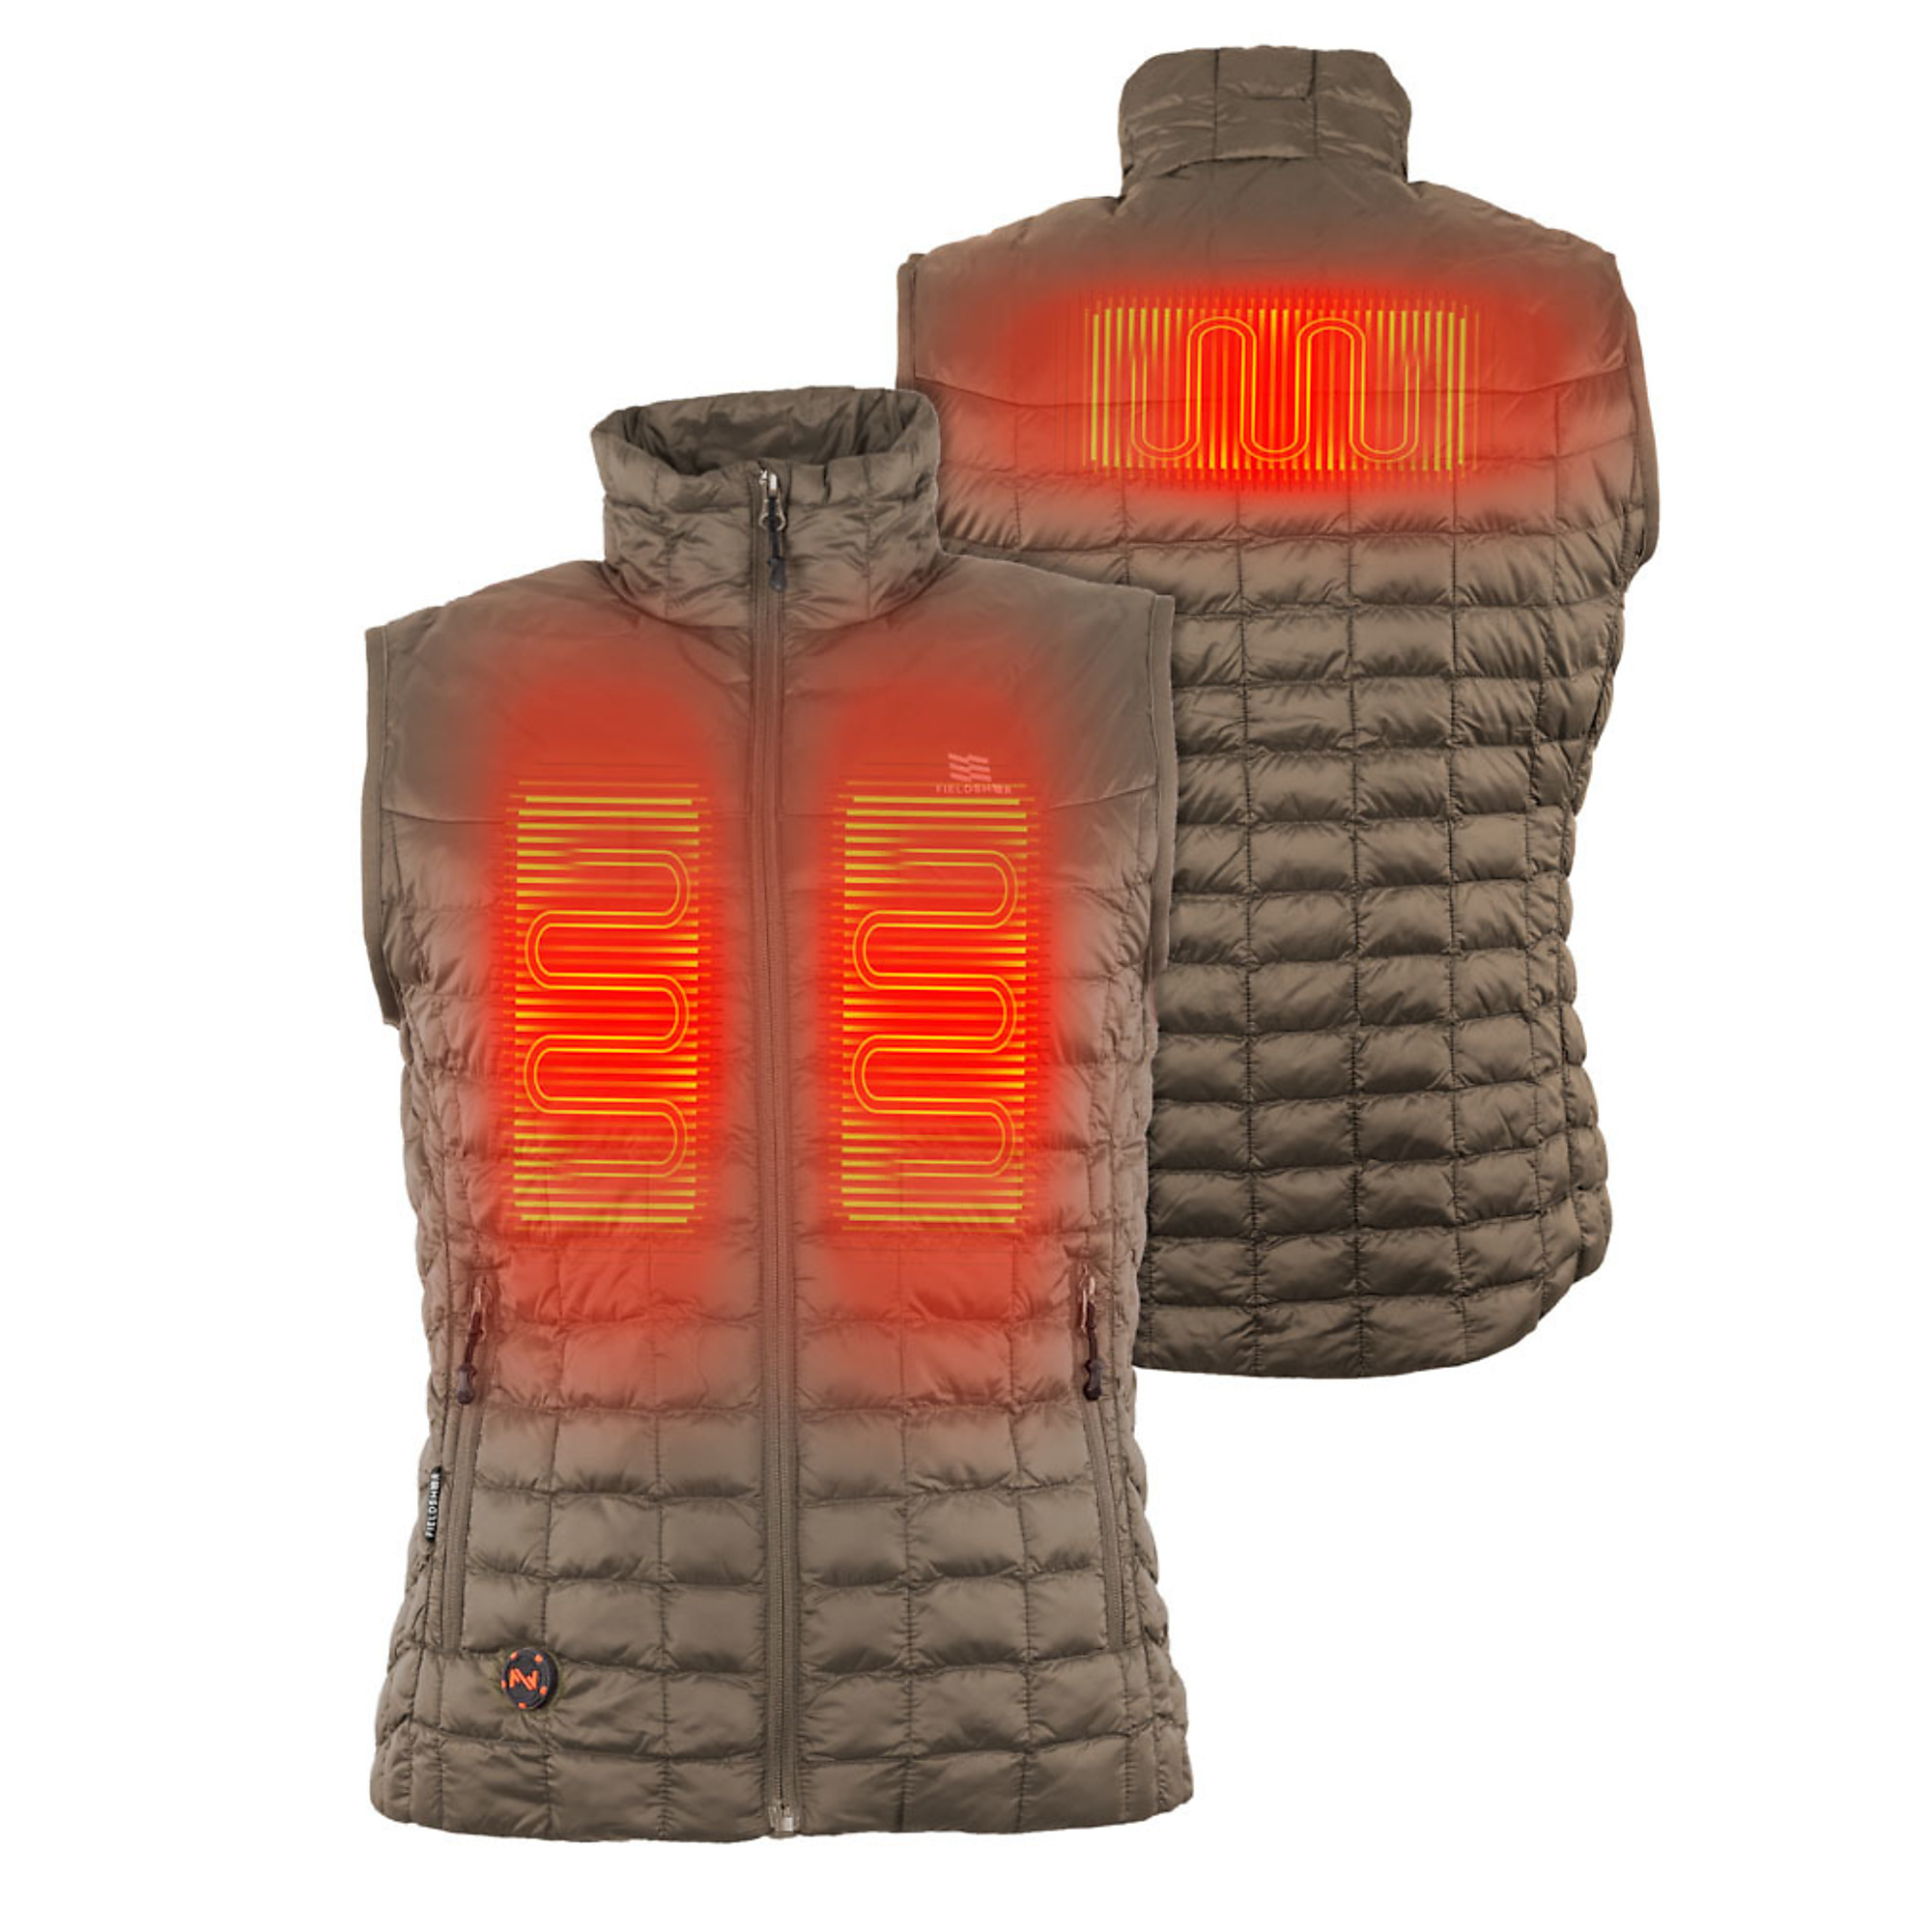 Fieldsheer, Women's 7.4v Backcountry Heated Vest, Size XL, Color Tan, Model MWWV04340521